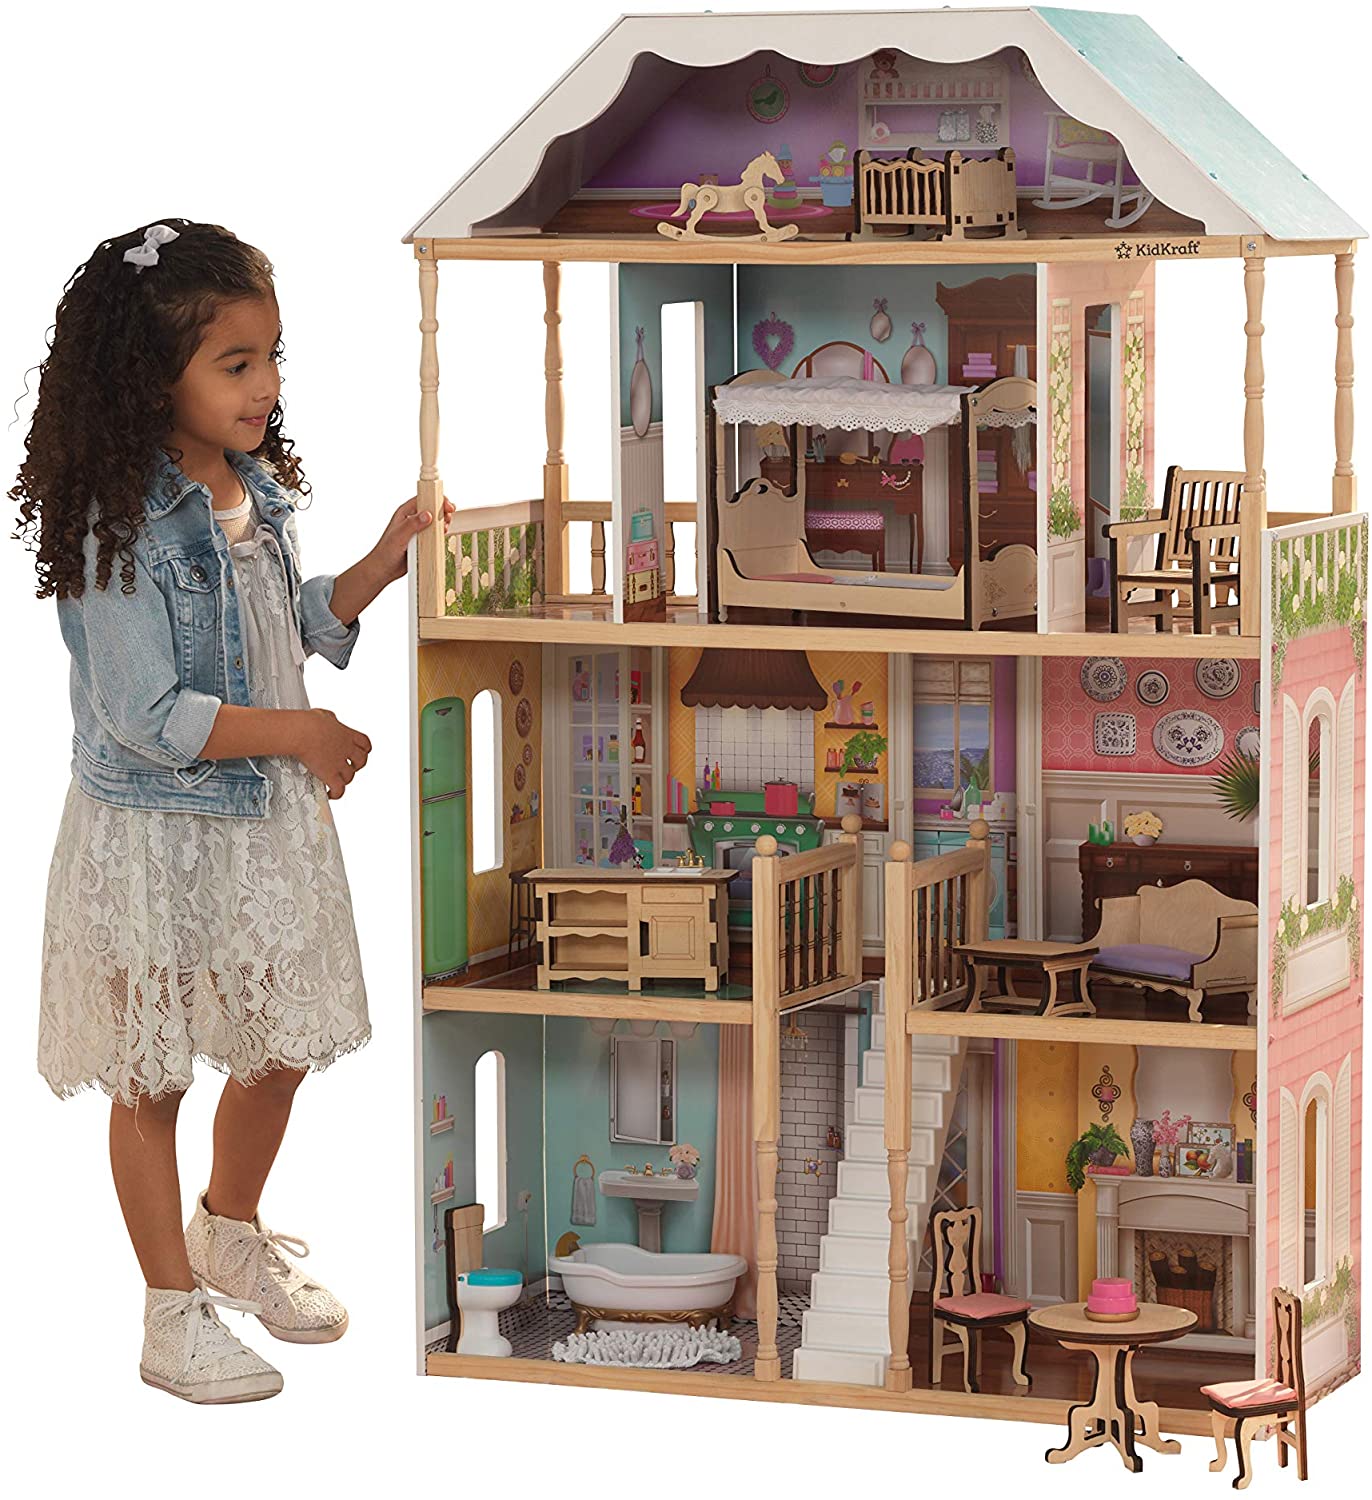 dollhouse for girls